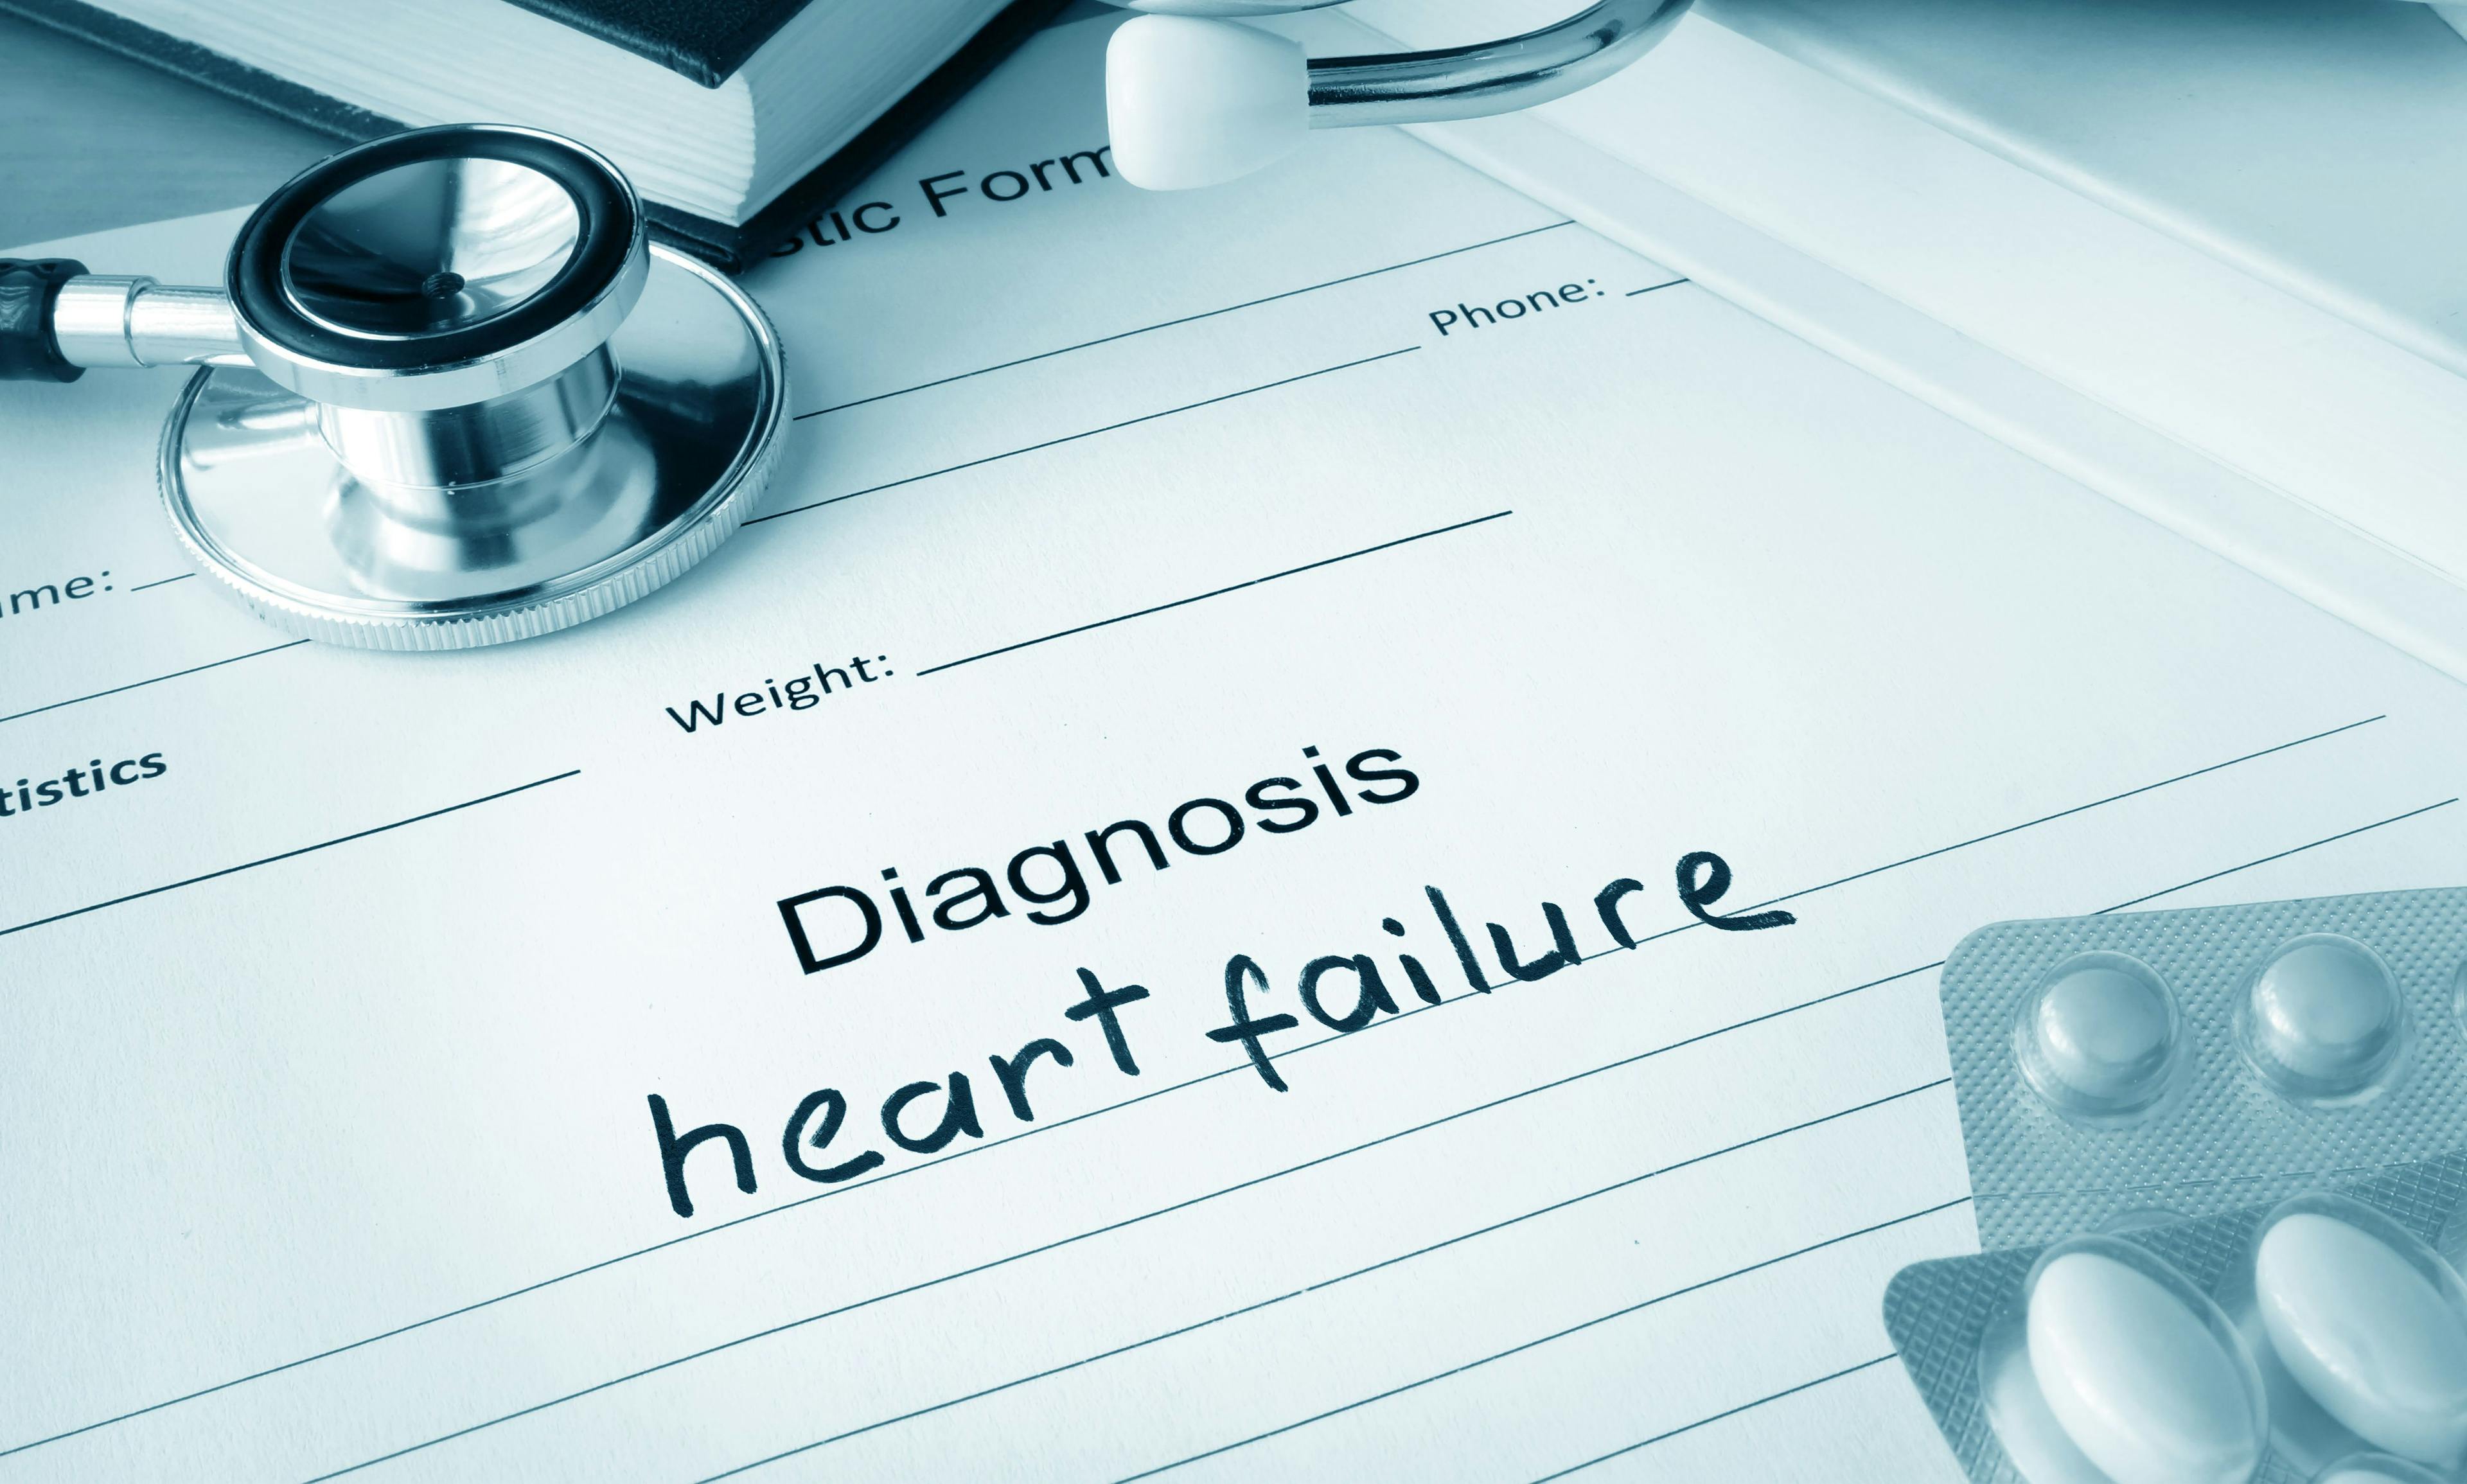 Heart failure stock image. | Credit: Fotolio